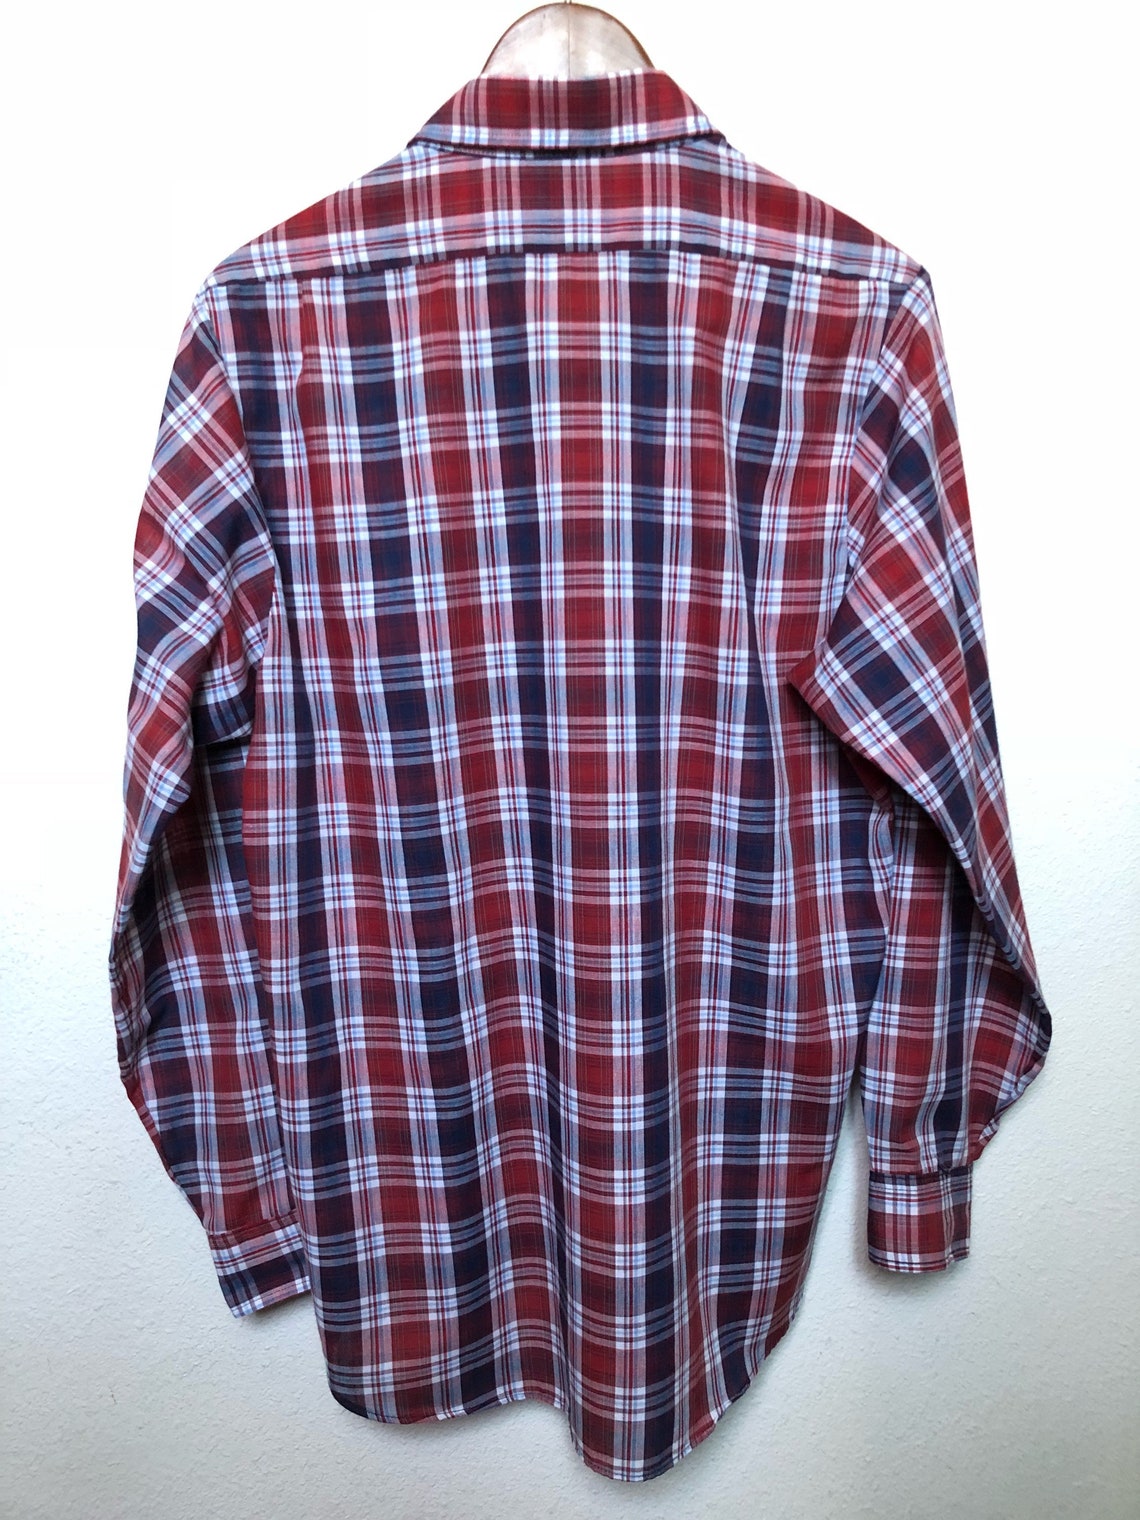 Vintage Levi's plaid shirt red white blue long sleeve | Etsy